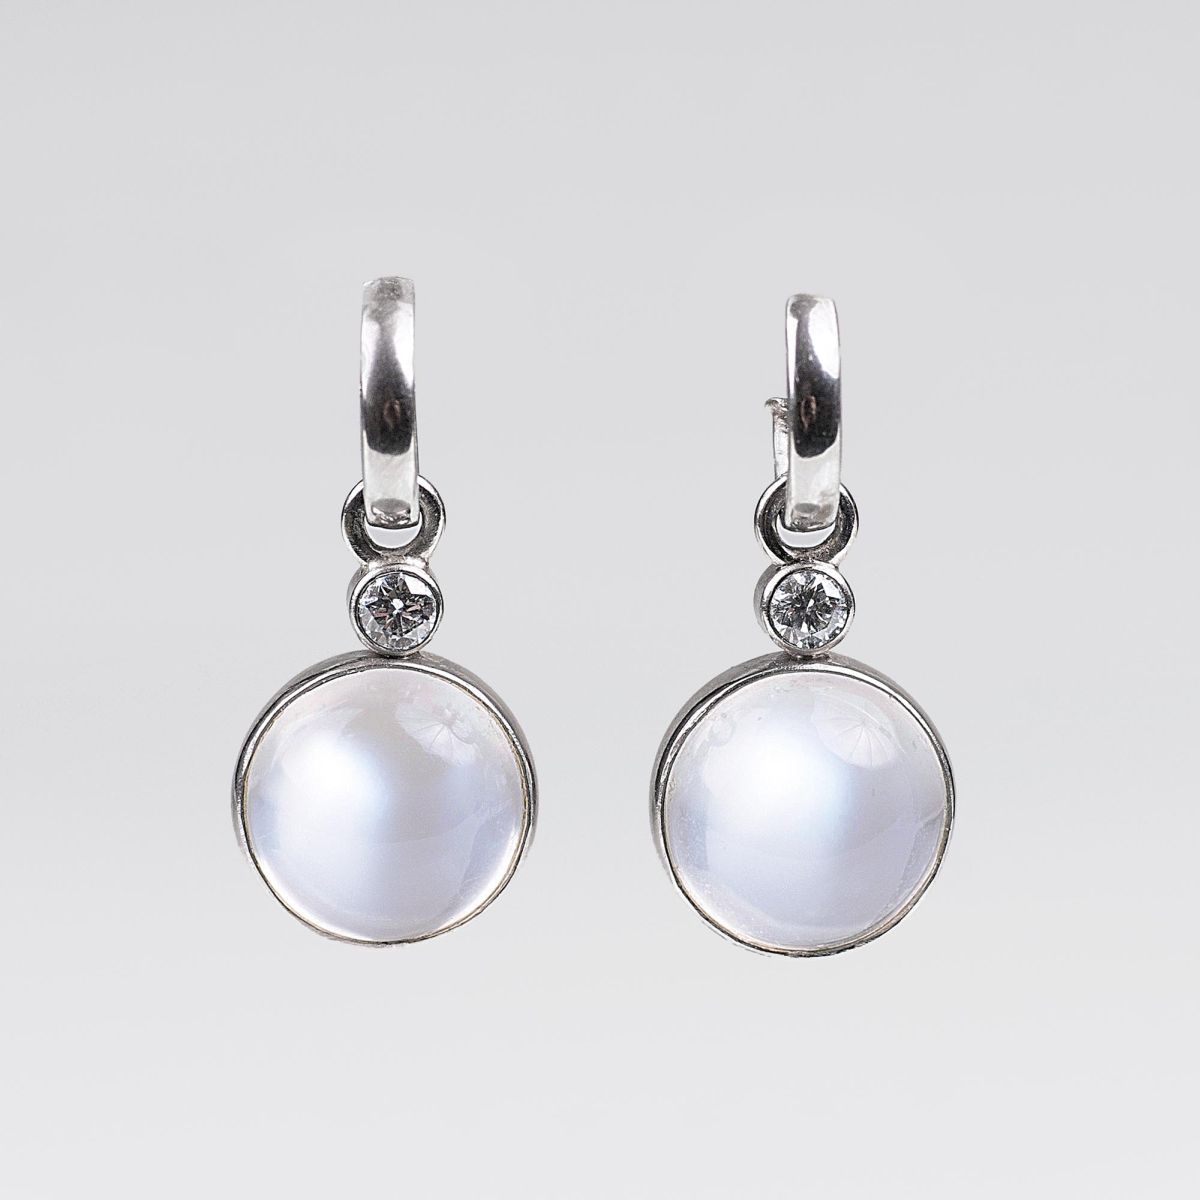 A Pair of Moonstone Diamond Earrings